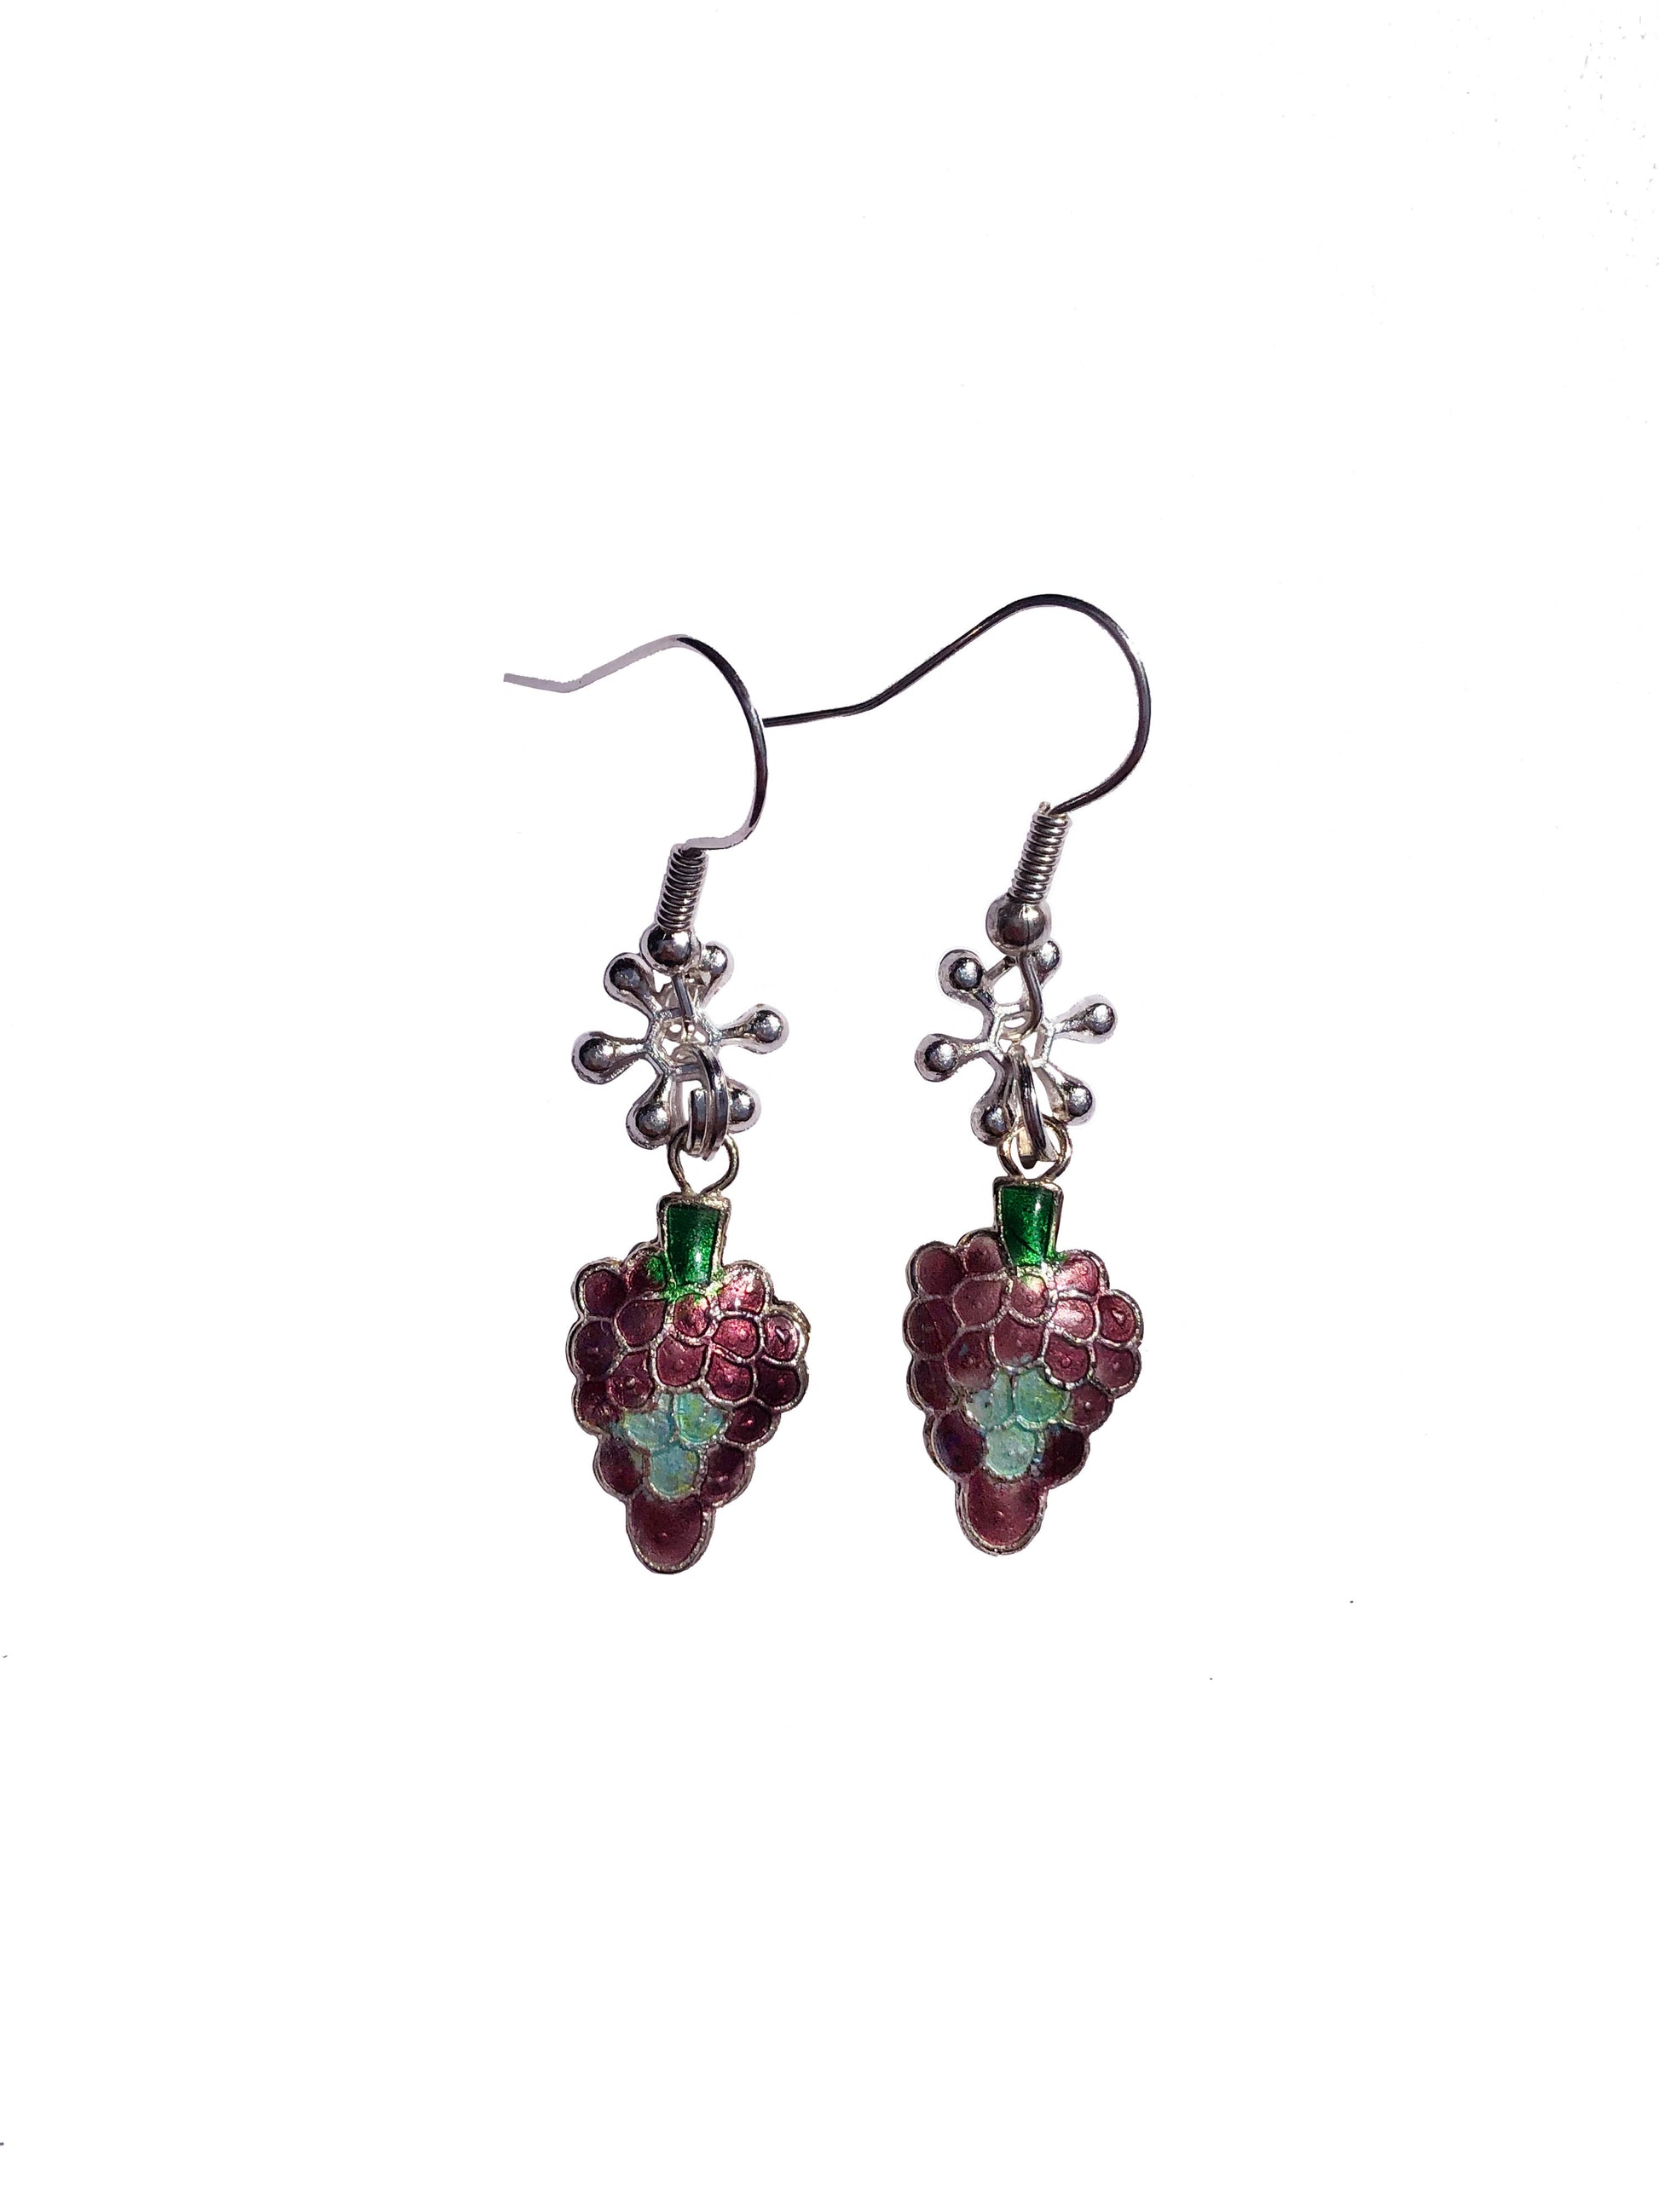 a pair of handmade purple grape charm earrings with flower charms.